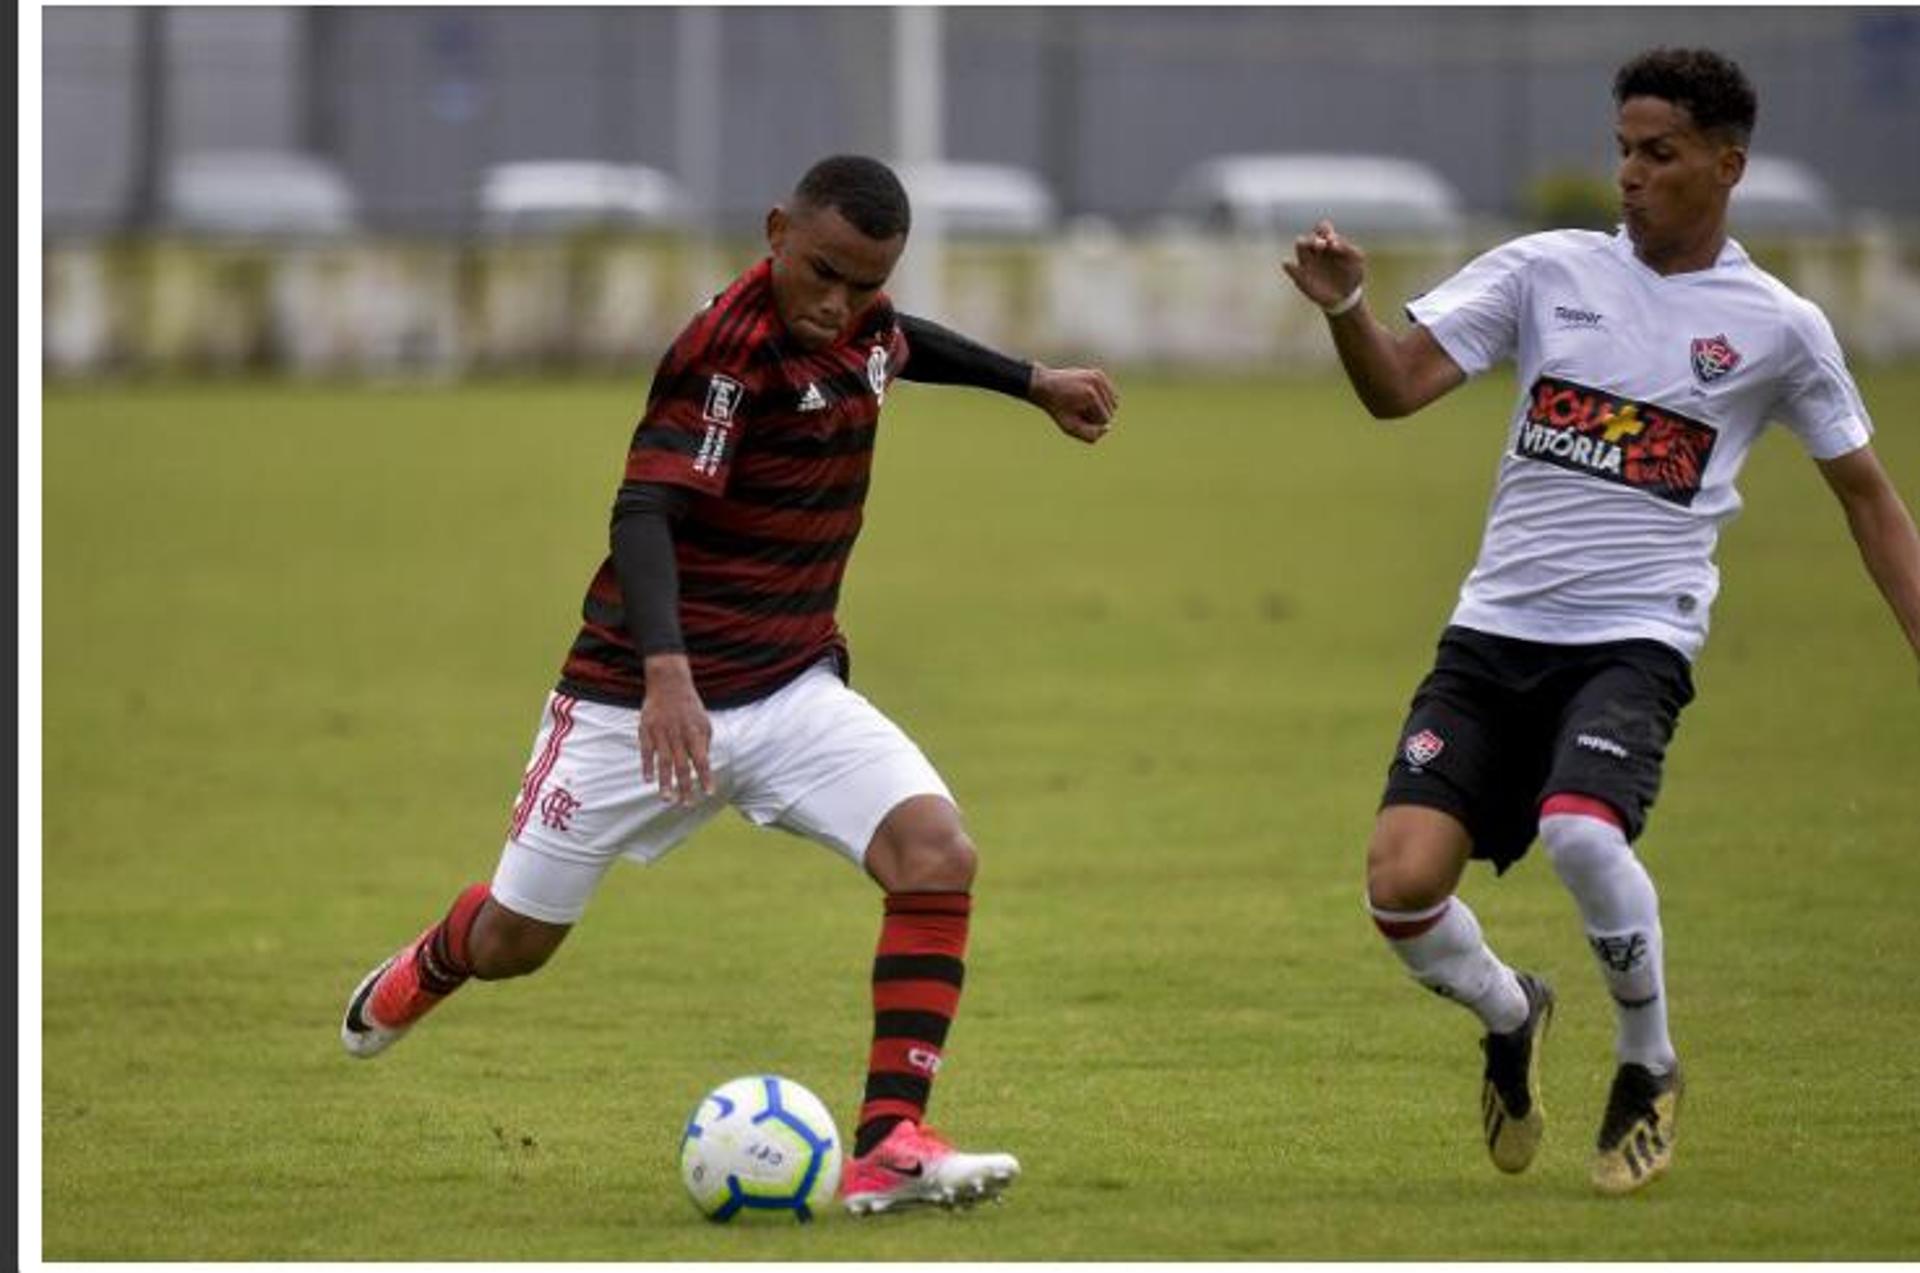 Jean - Atacante do Flamengo Sub-17